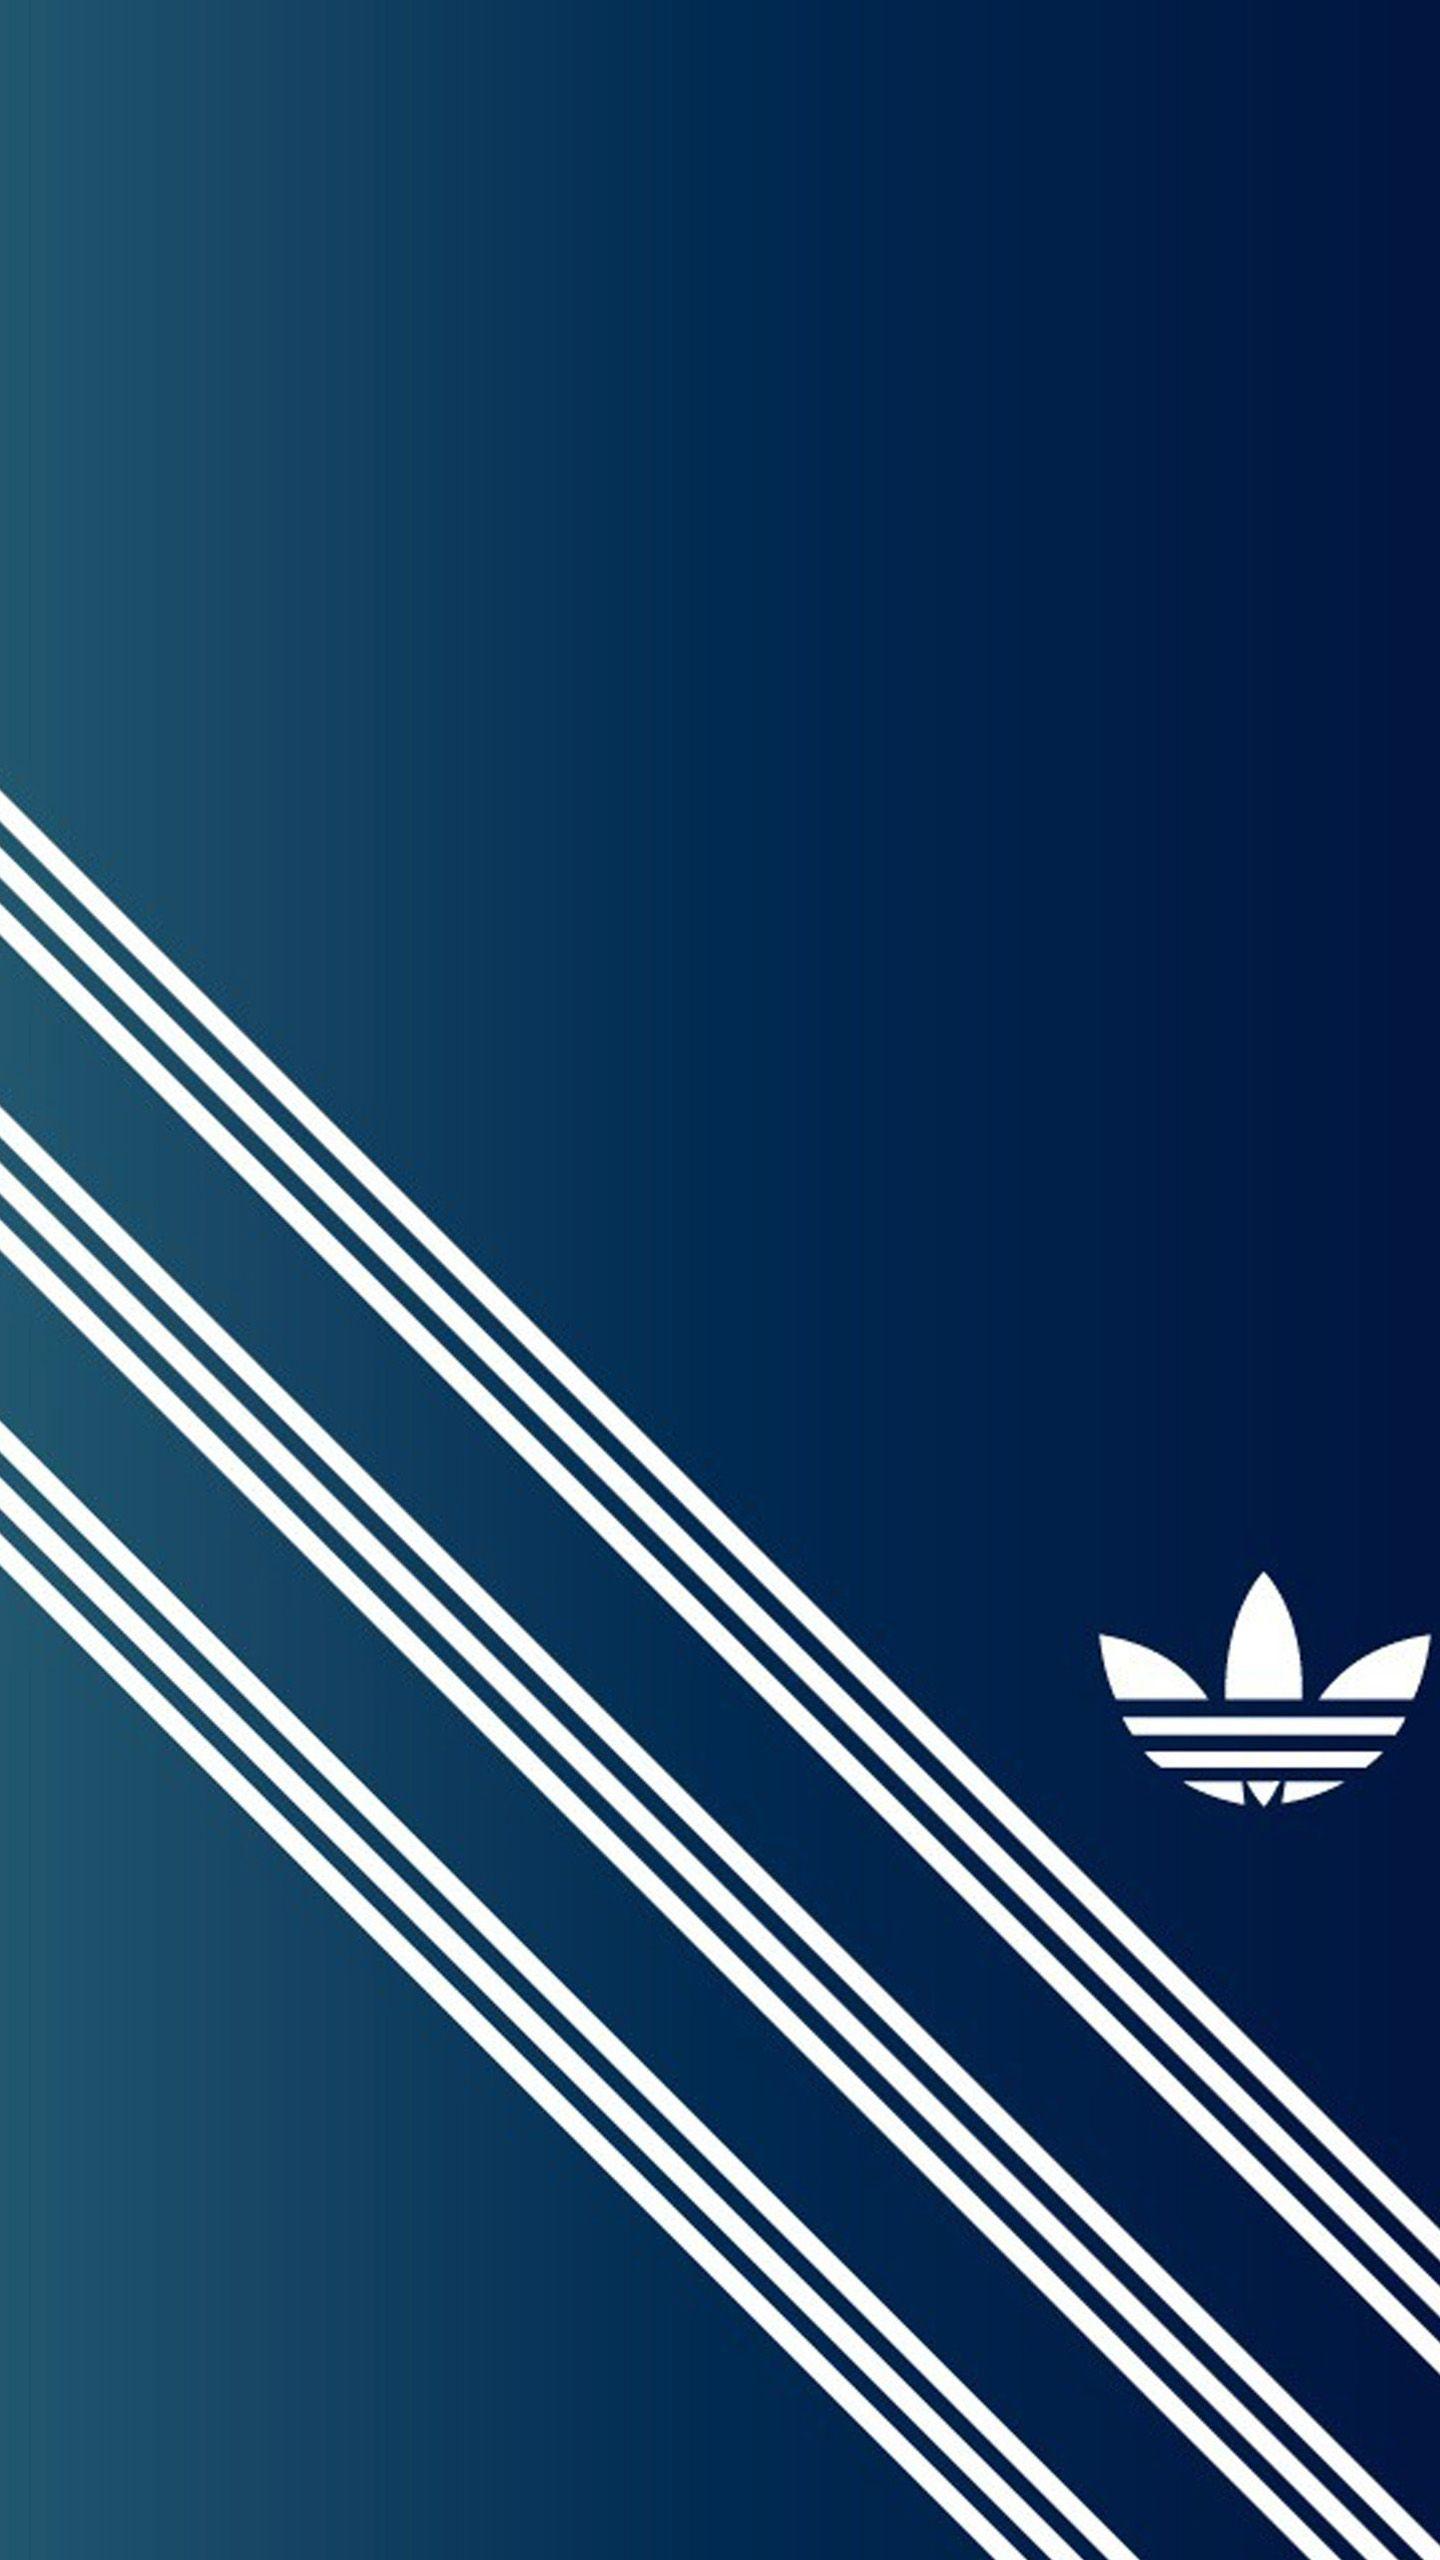 Adidas wallpaper for galaxy